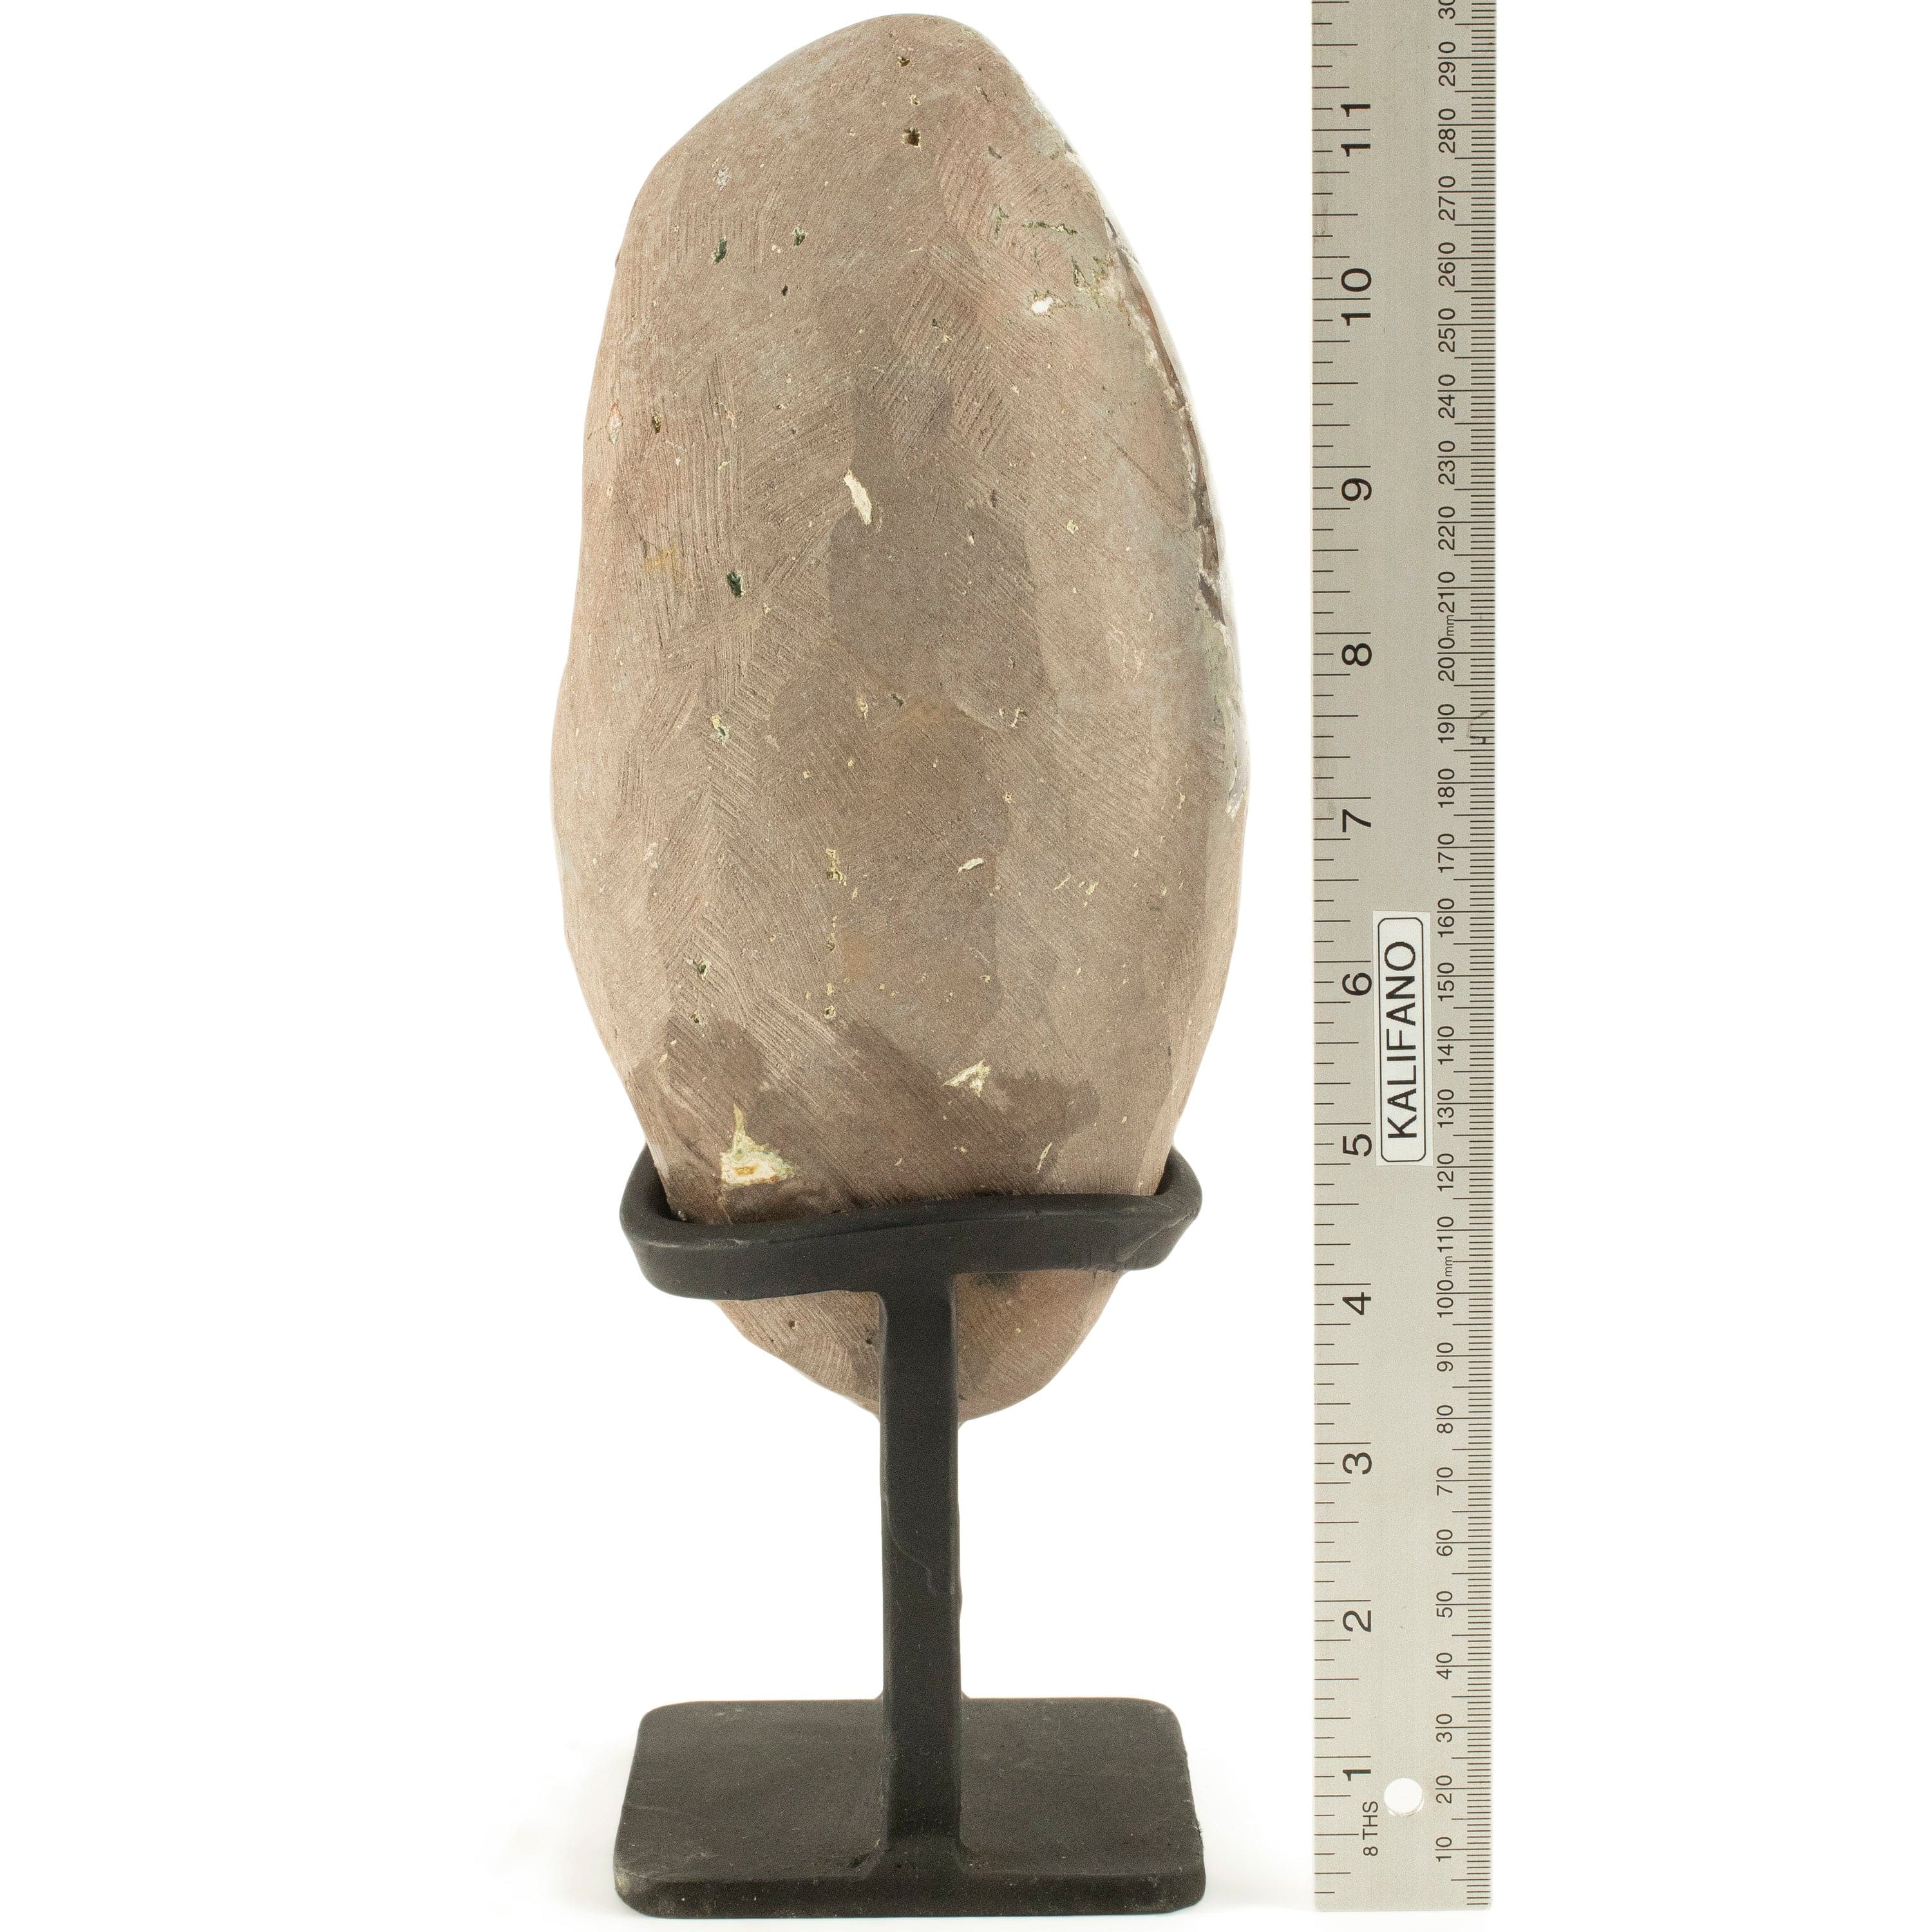 Uruguayan Amethyst Geode on Custom Stand - 7.7 lbs / 12 in.